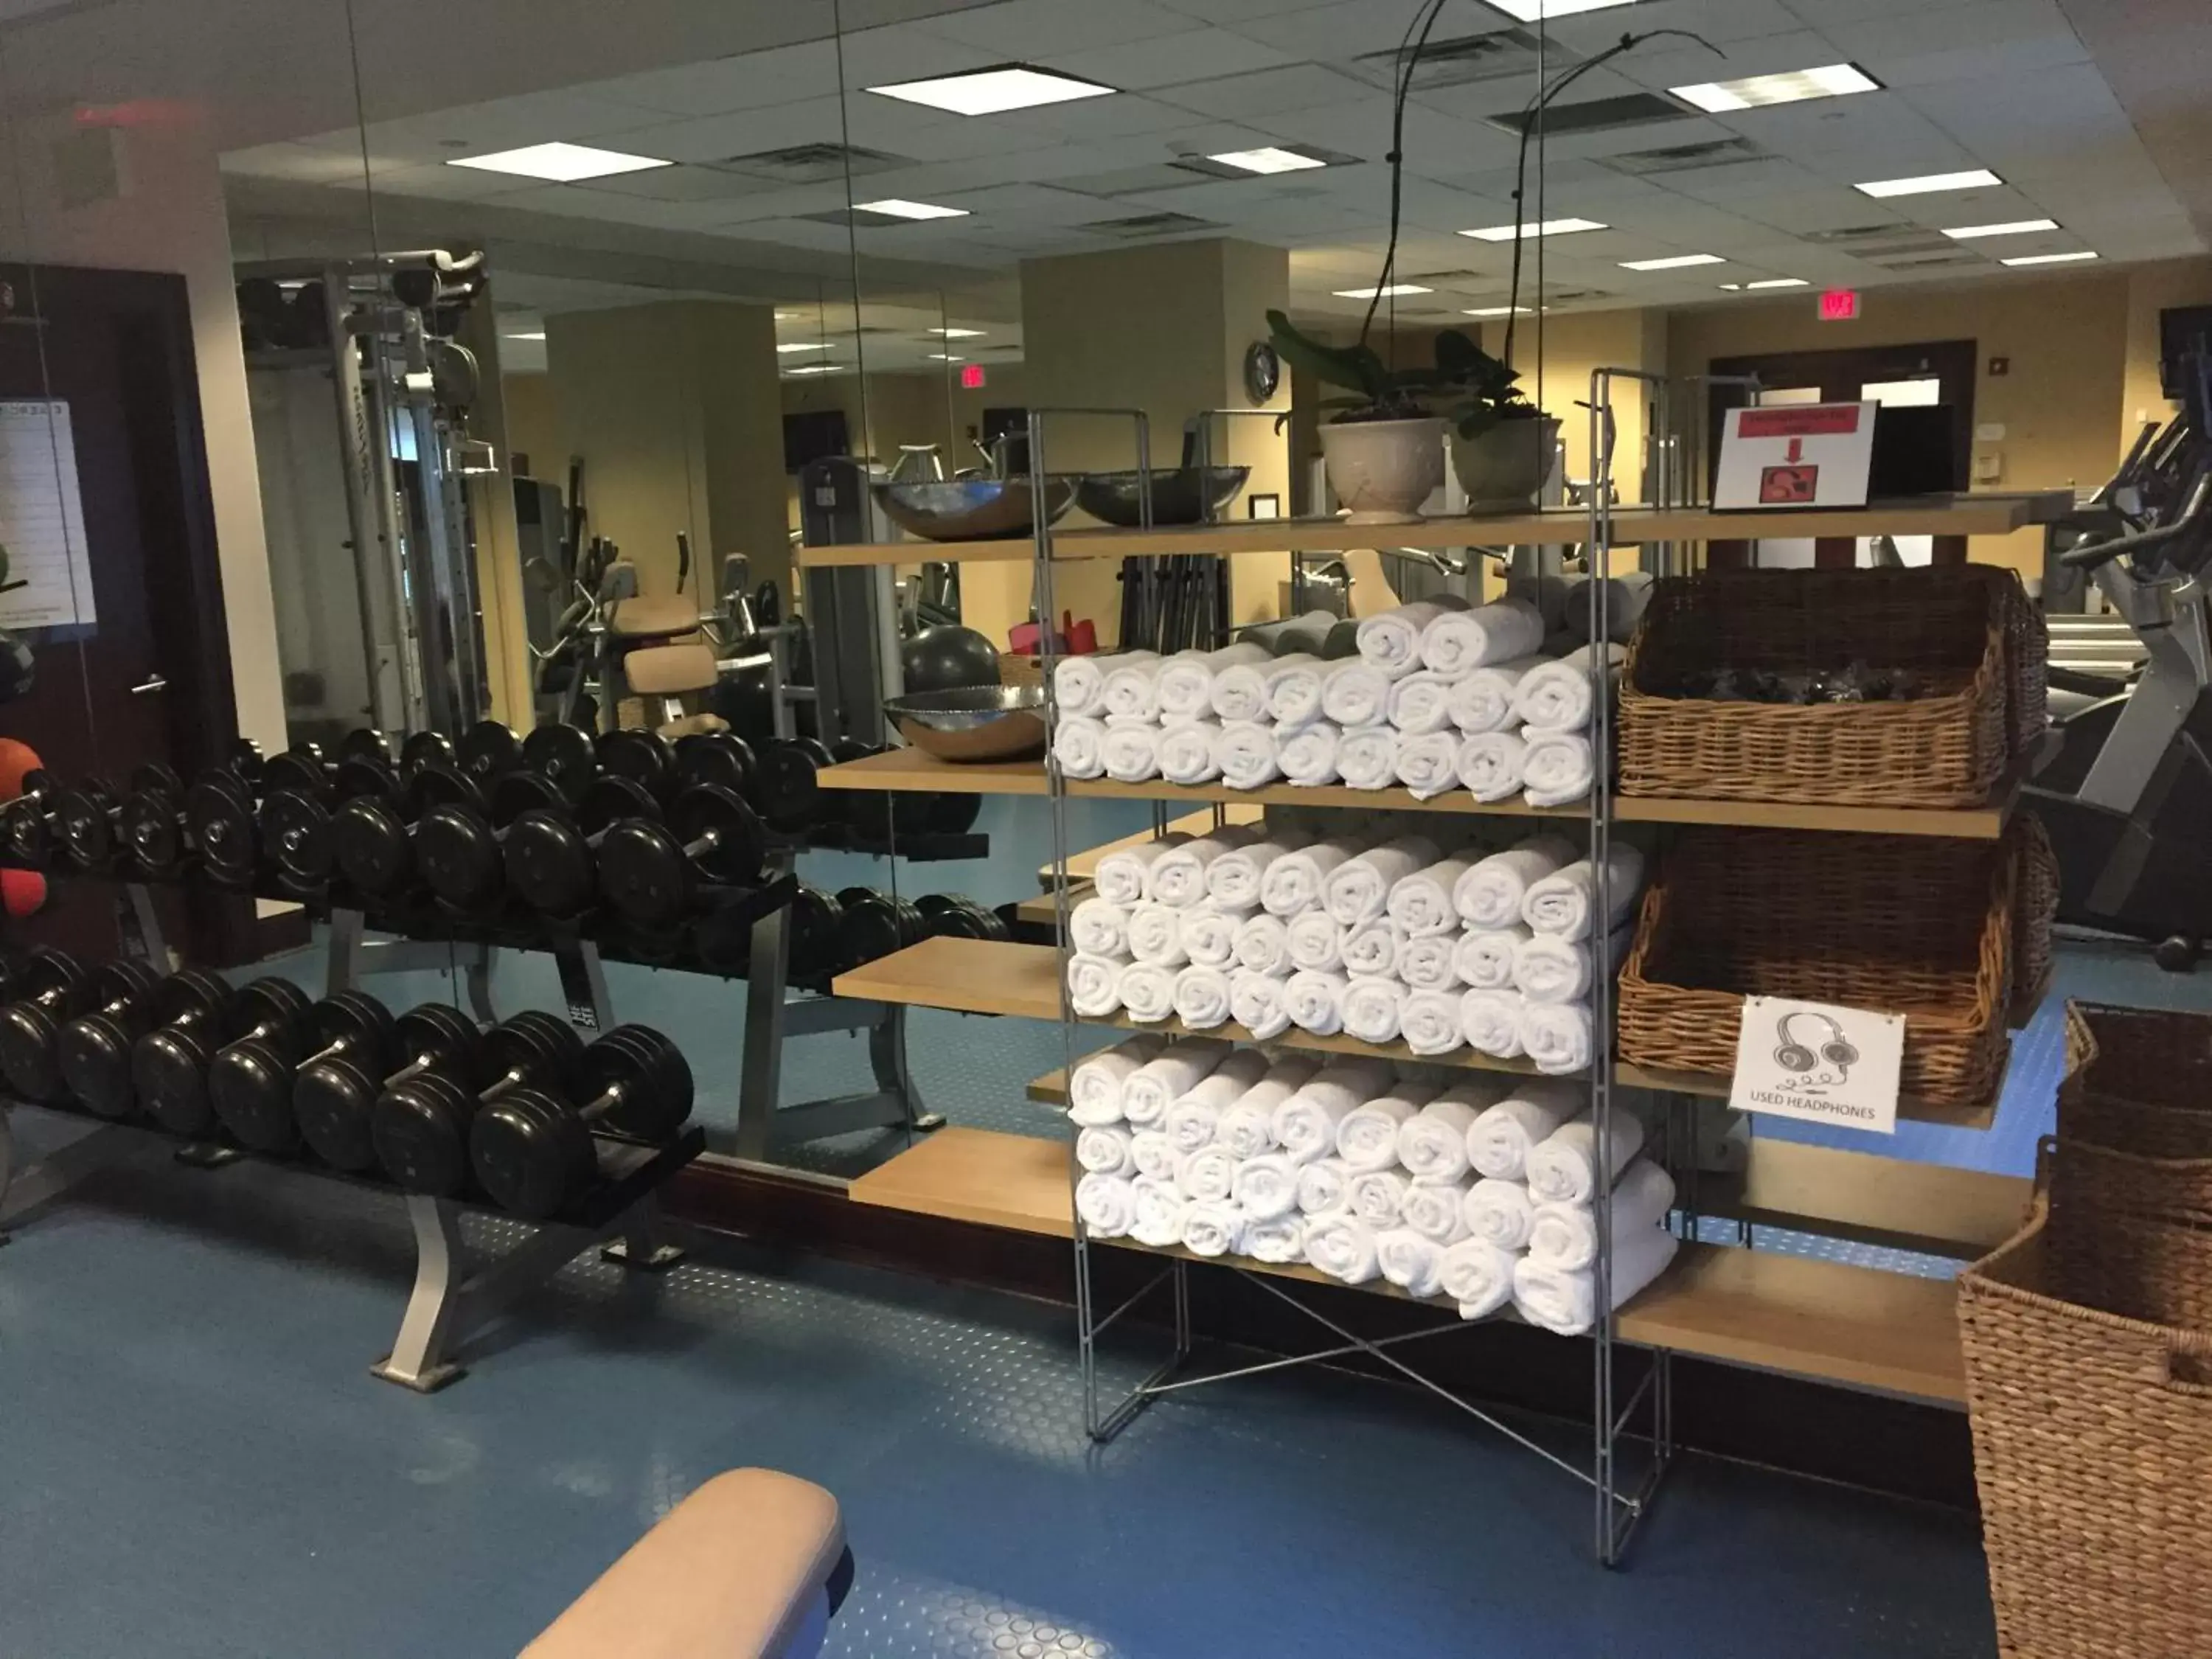 Fitness centre/facilities, Fitness Center/Facilities in Sofitel Philadelphia at Rittenhouse Square